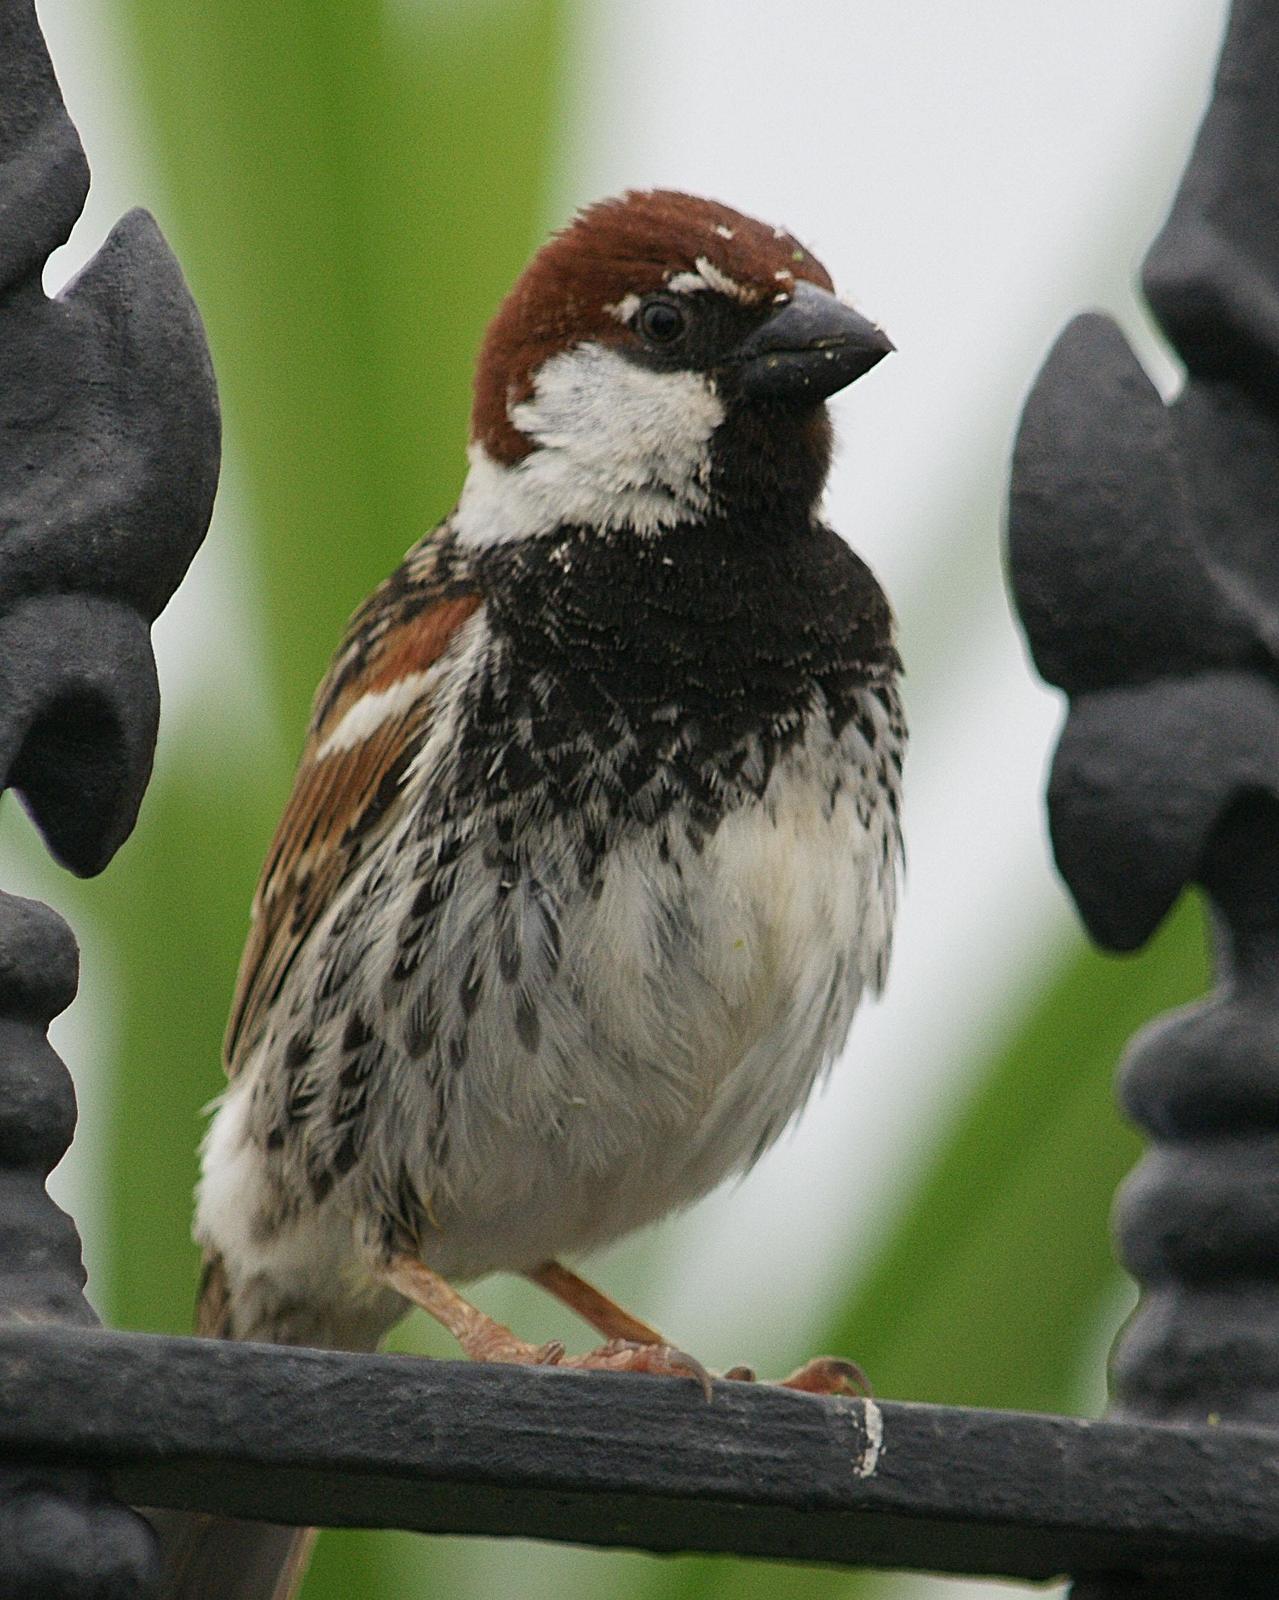 Spanish Sparrow Photo by Steve Percival